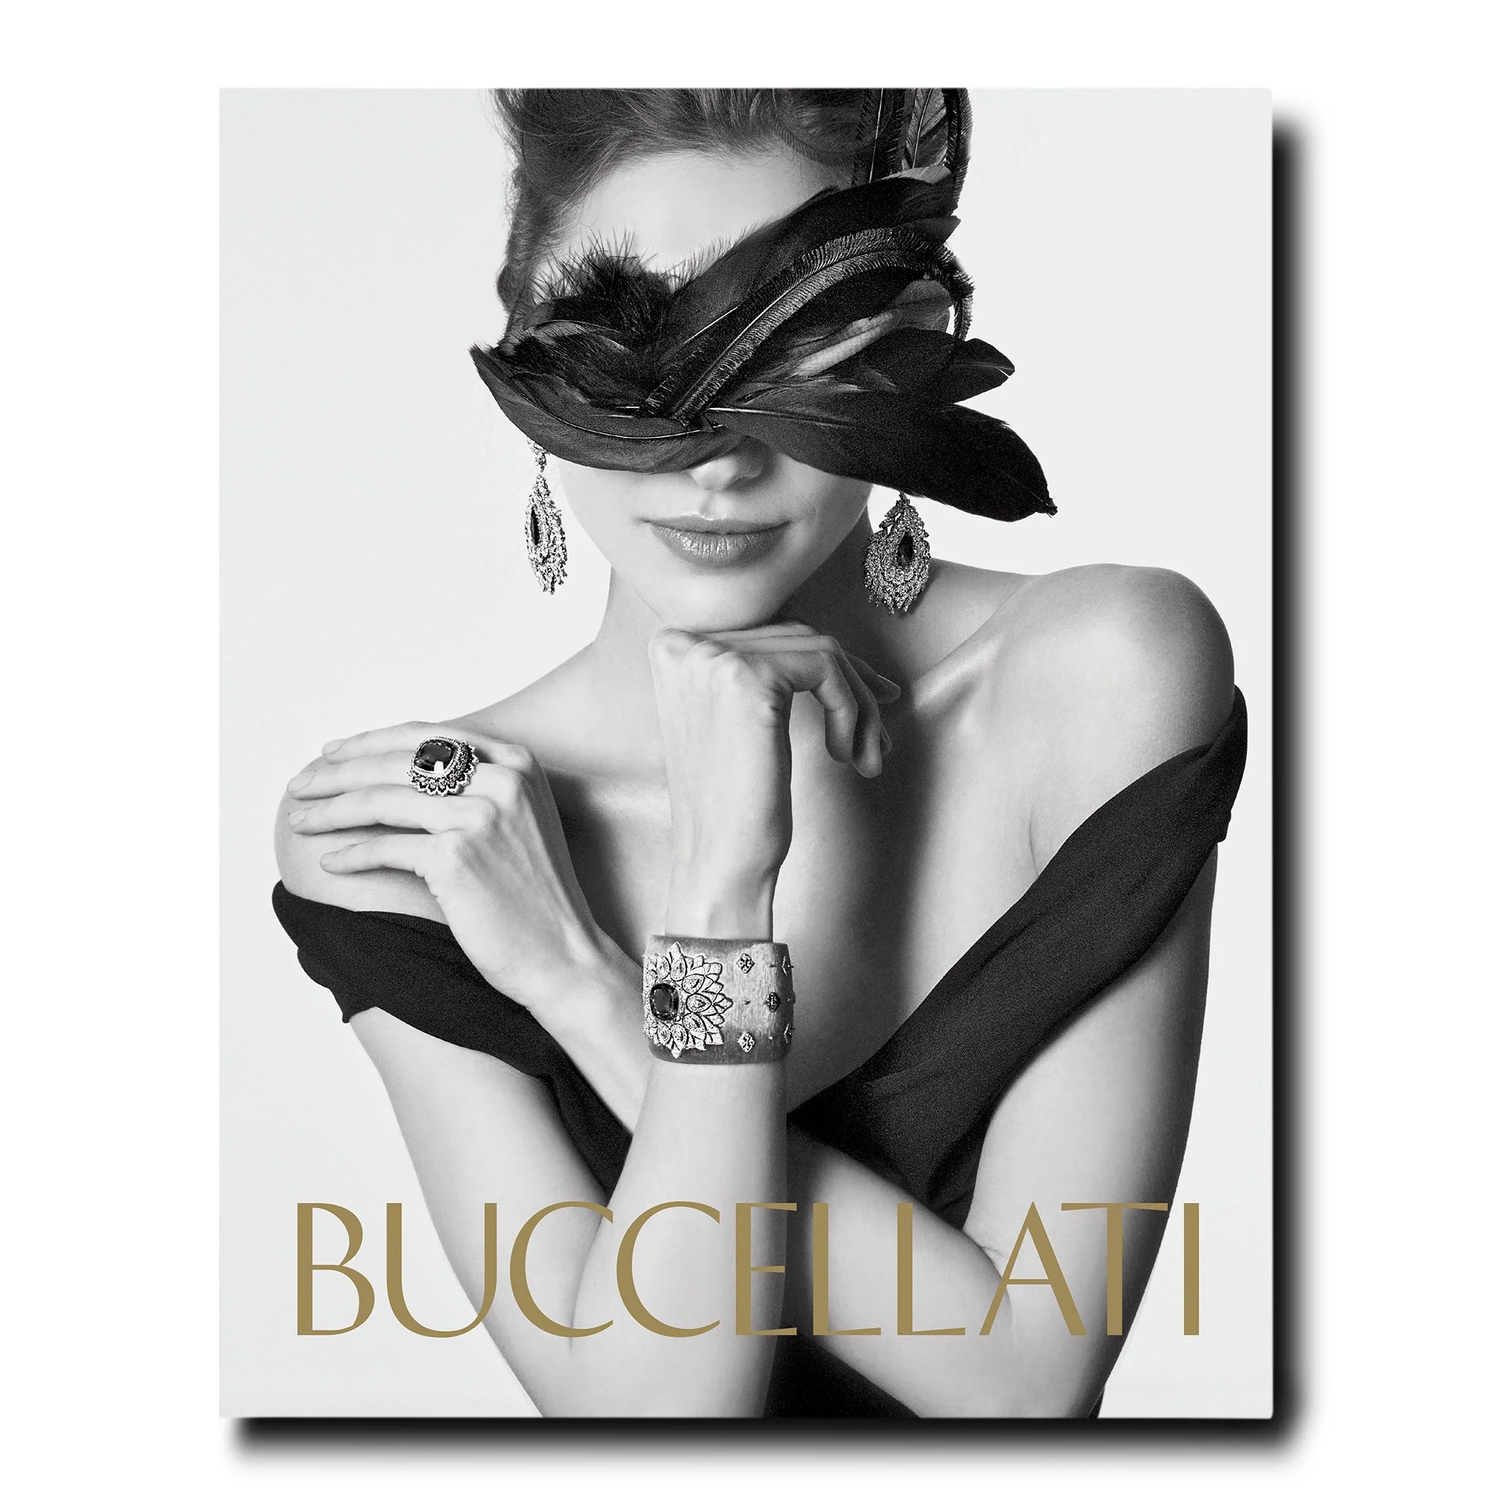 BUCCELLATI: A CENTURY OF TIMELESS BEAUTY — LUXYSPACE Interior Design, Award Winning Design Firm